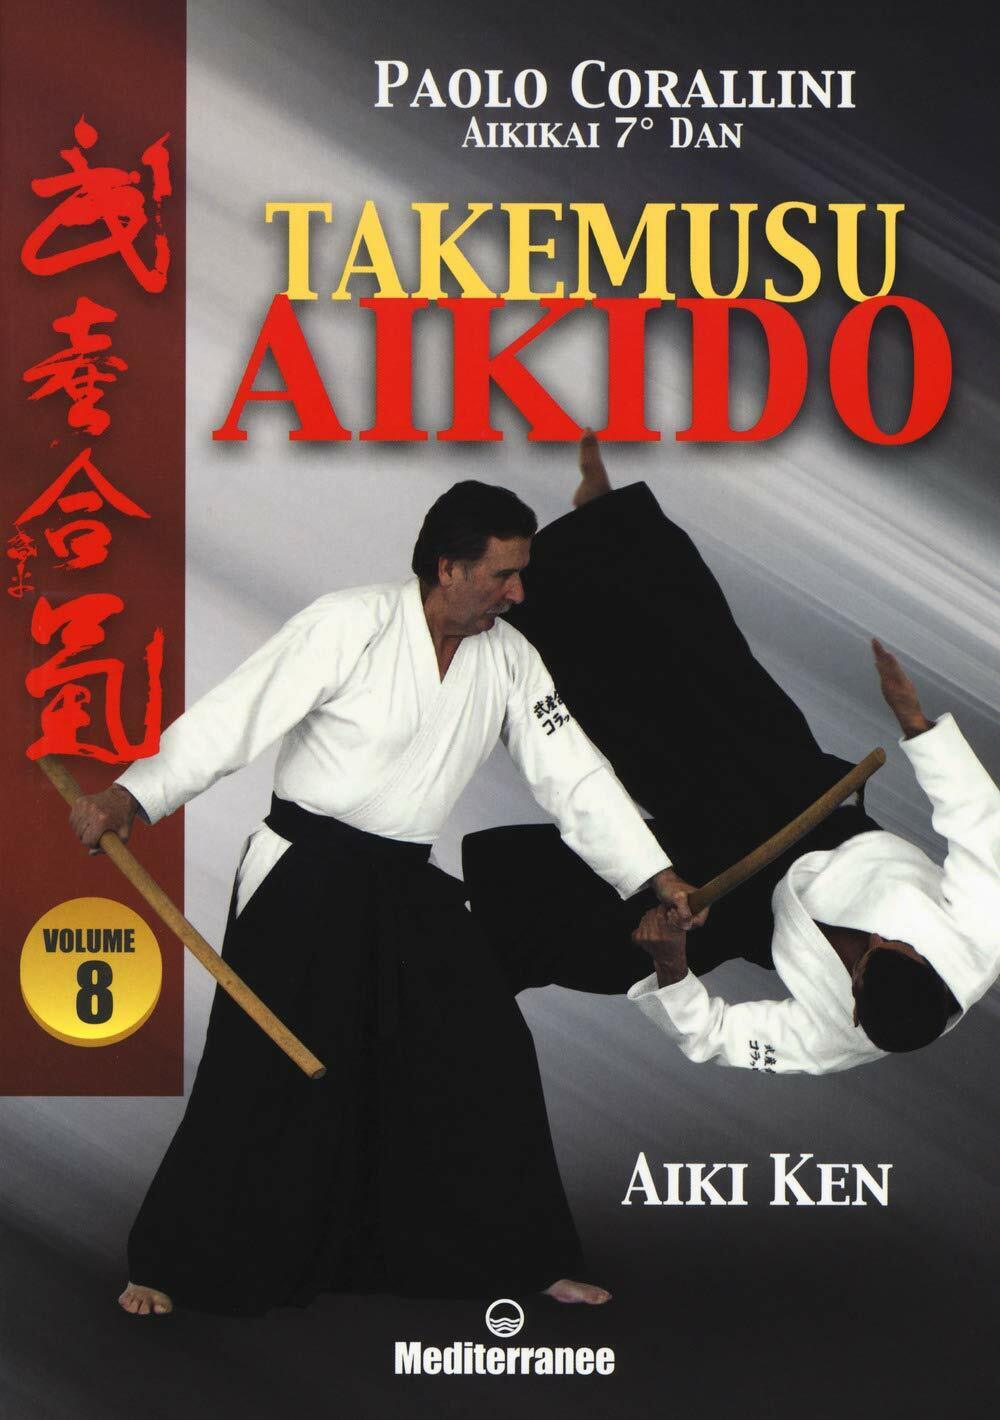 Takemusu aikido. Aiki Ken (Vol. 8) - Paolo Corallini - Mediterranee, 2018 libro usato